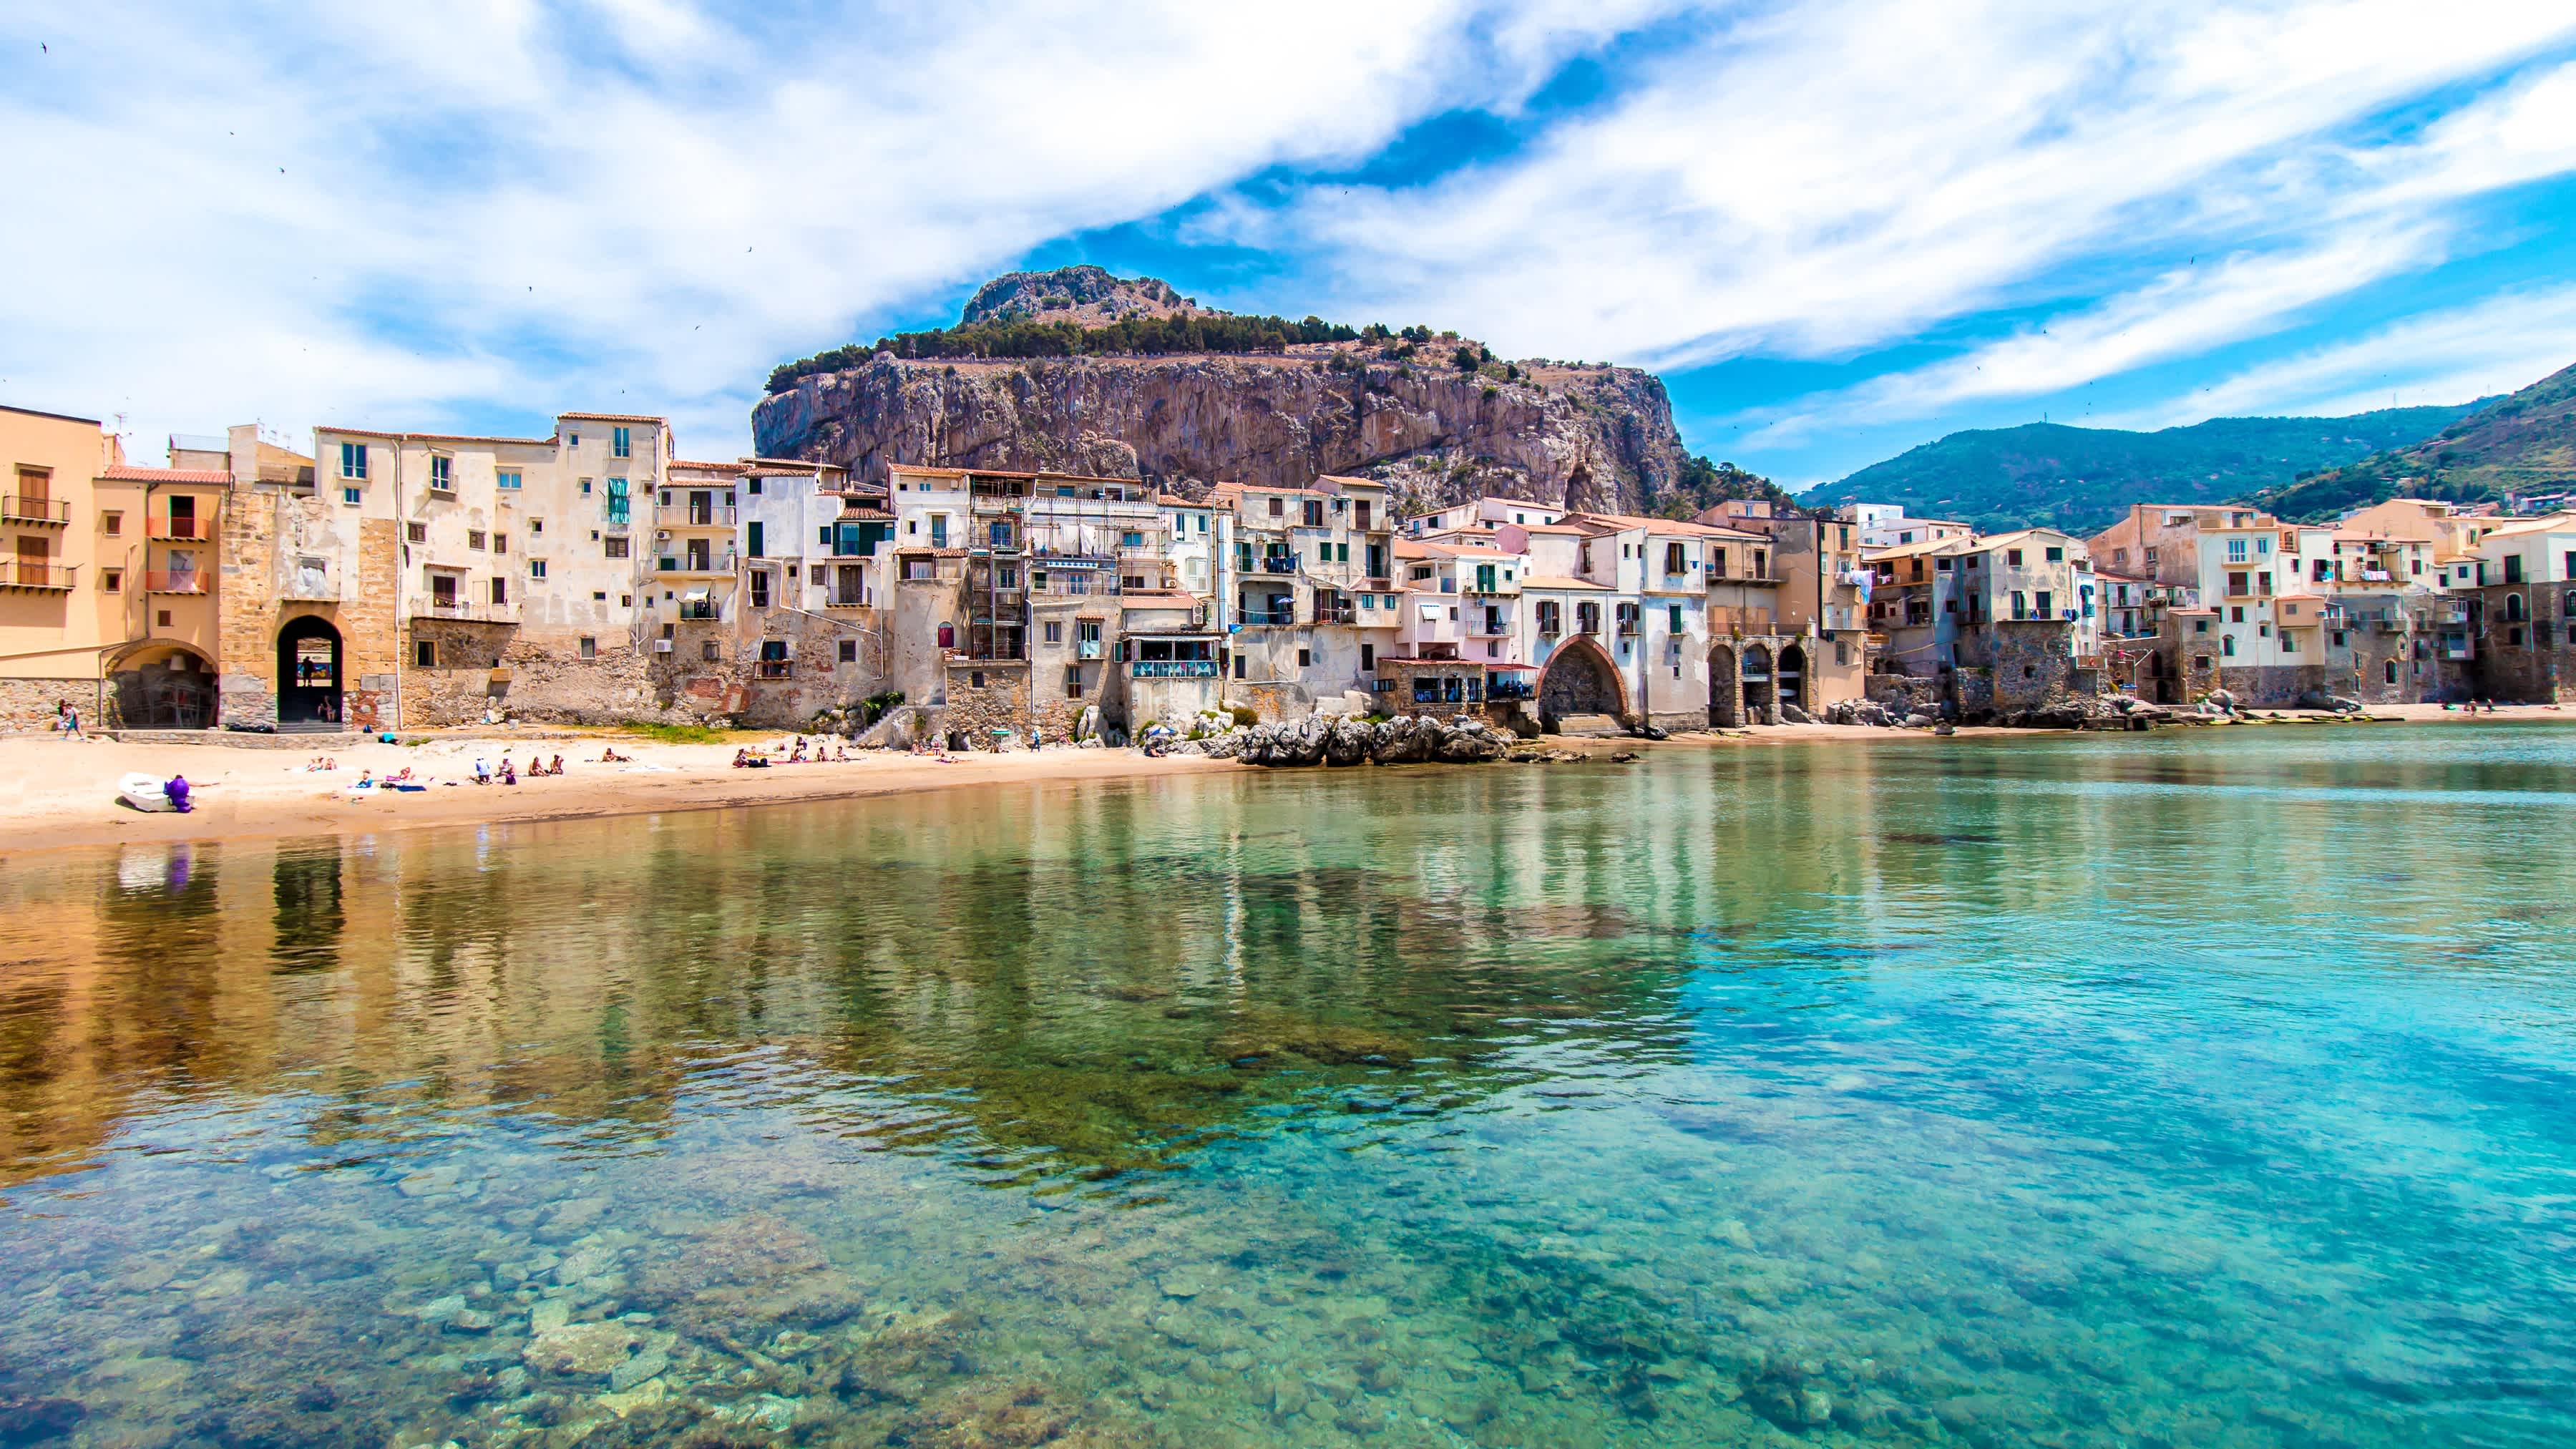 Vue sur la ville de Cefalu depuis la mer, en Sicile, en Italie.